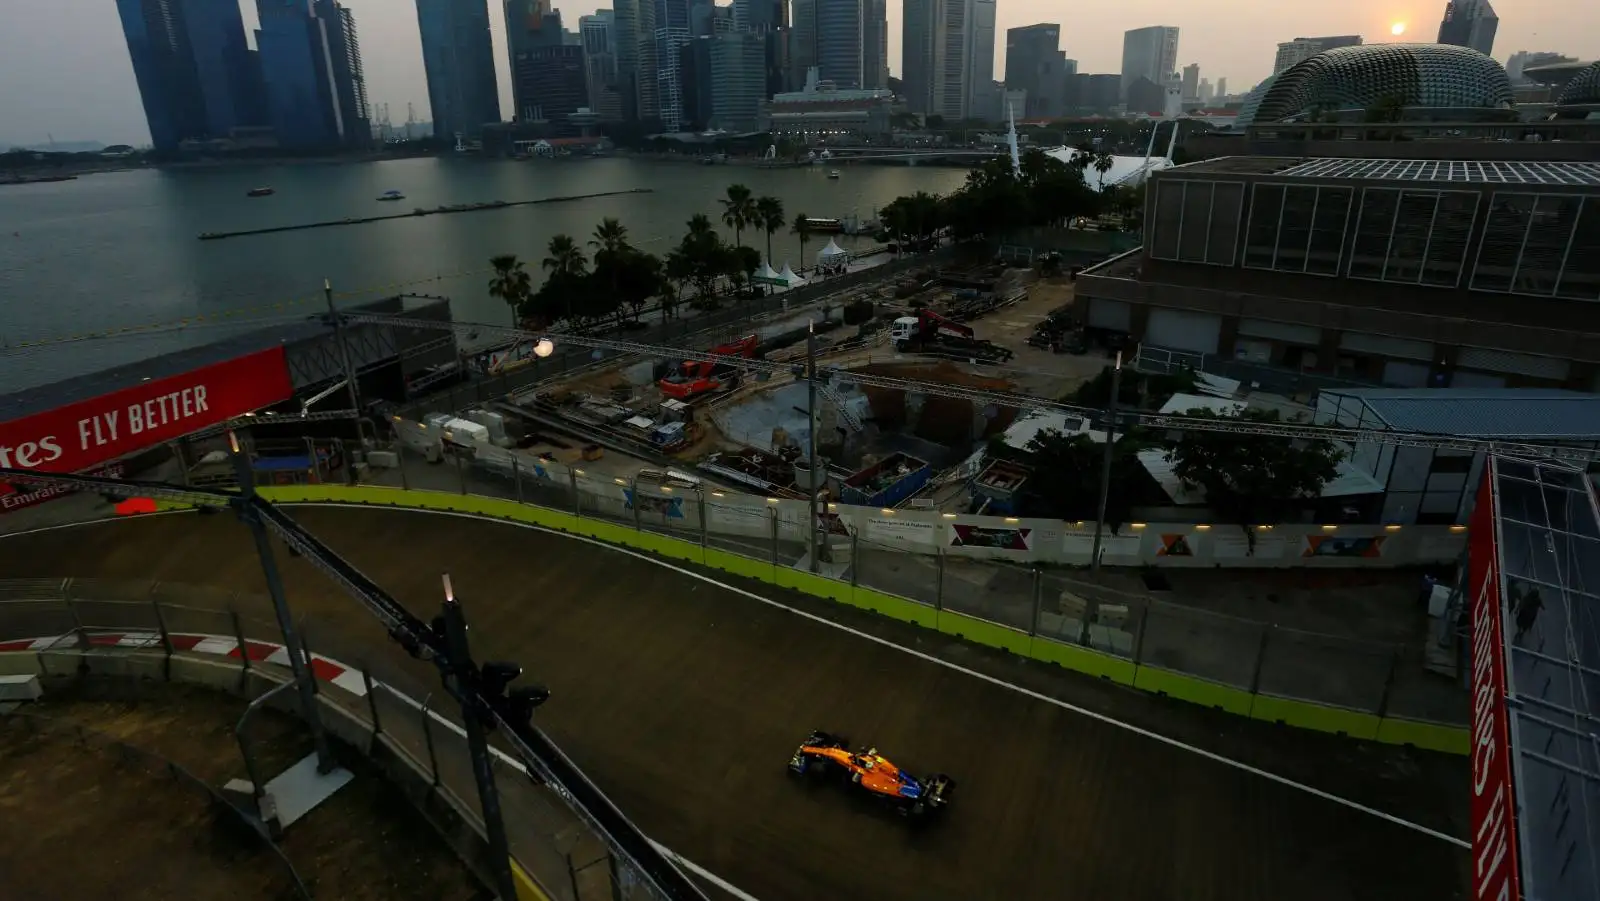 A McLaren on track at the Singapore GP. Marina Bay September 2019.